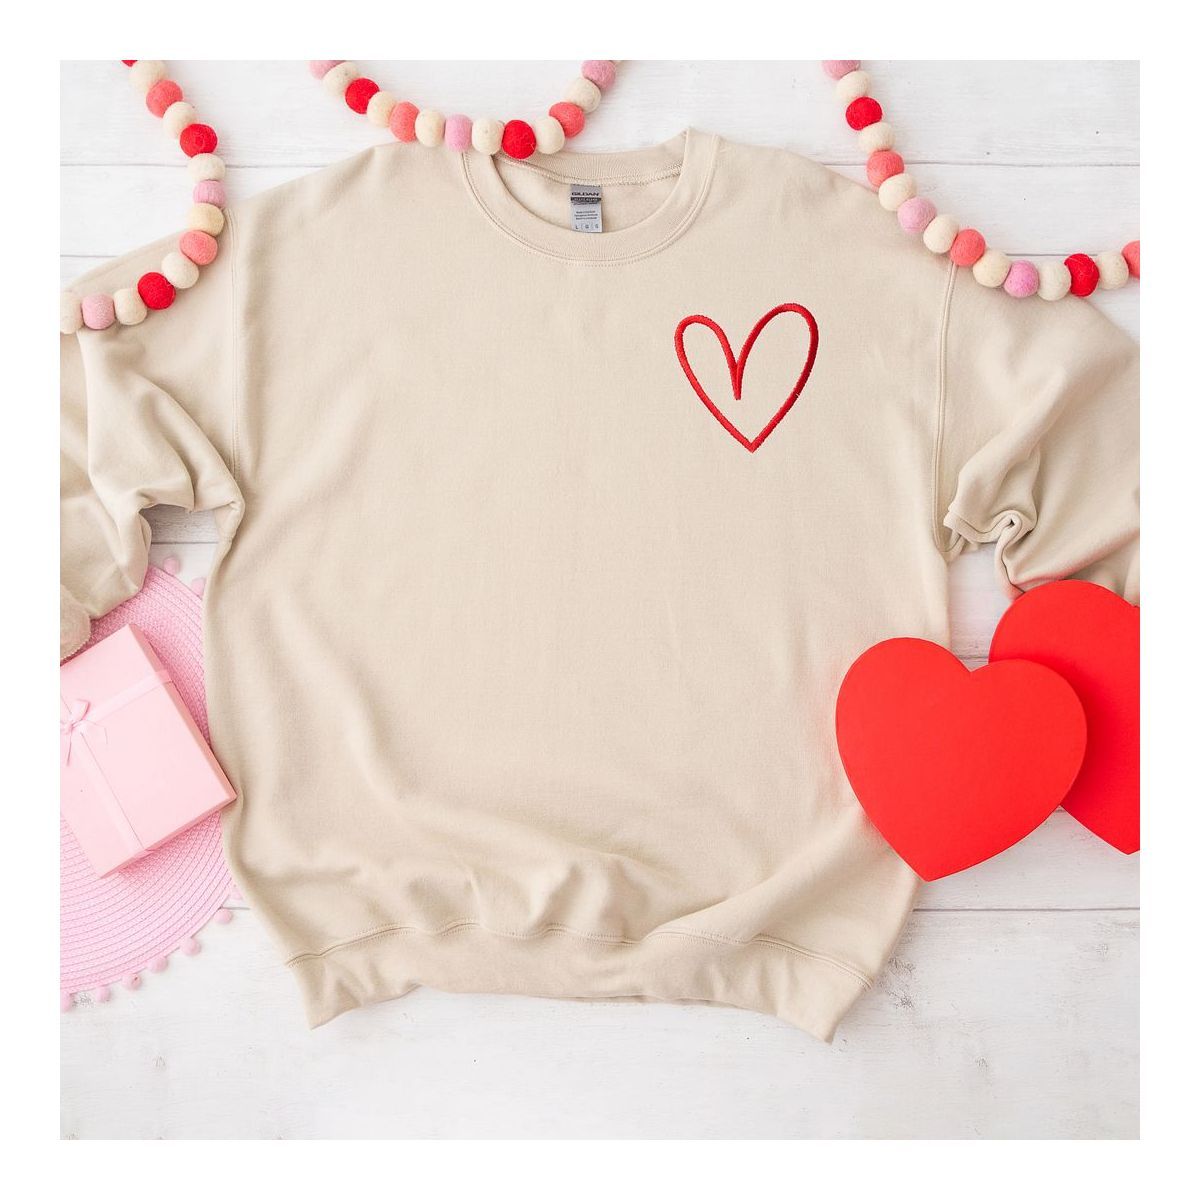 Simply Sage Market Women's Graphic Sweatshirt Embroidered Hand Drawn Heart | Target